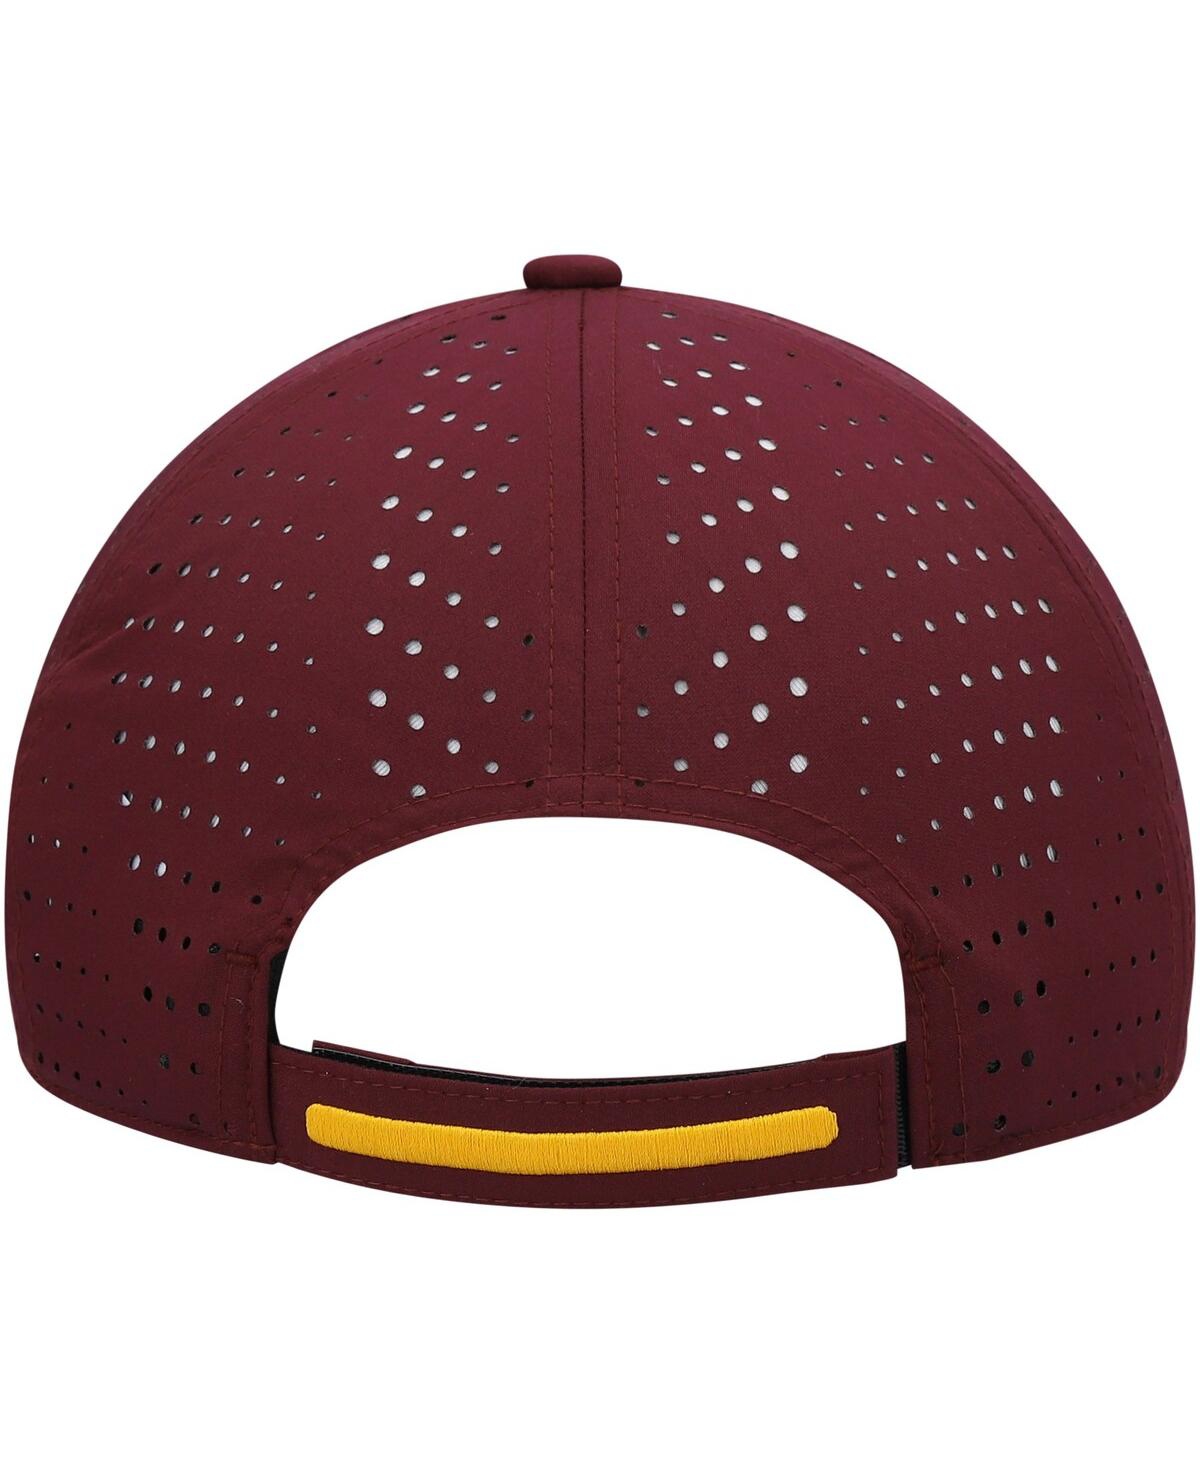 Shop Adidas Originals Men's Adidas Maroon Arizona State Sun Devils 2021 Sideline Aeroready Adjustable Hat